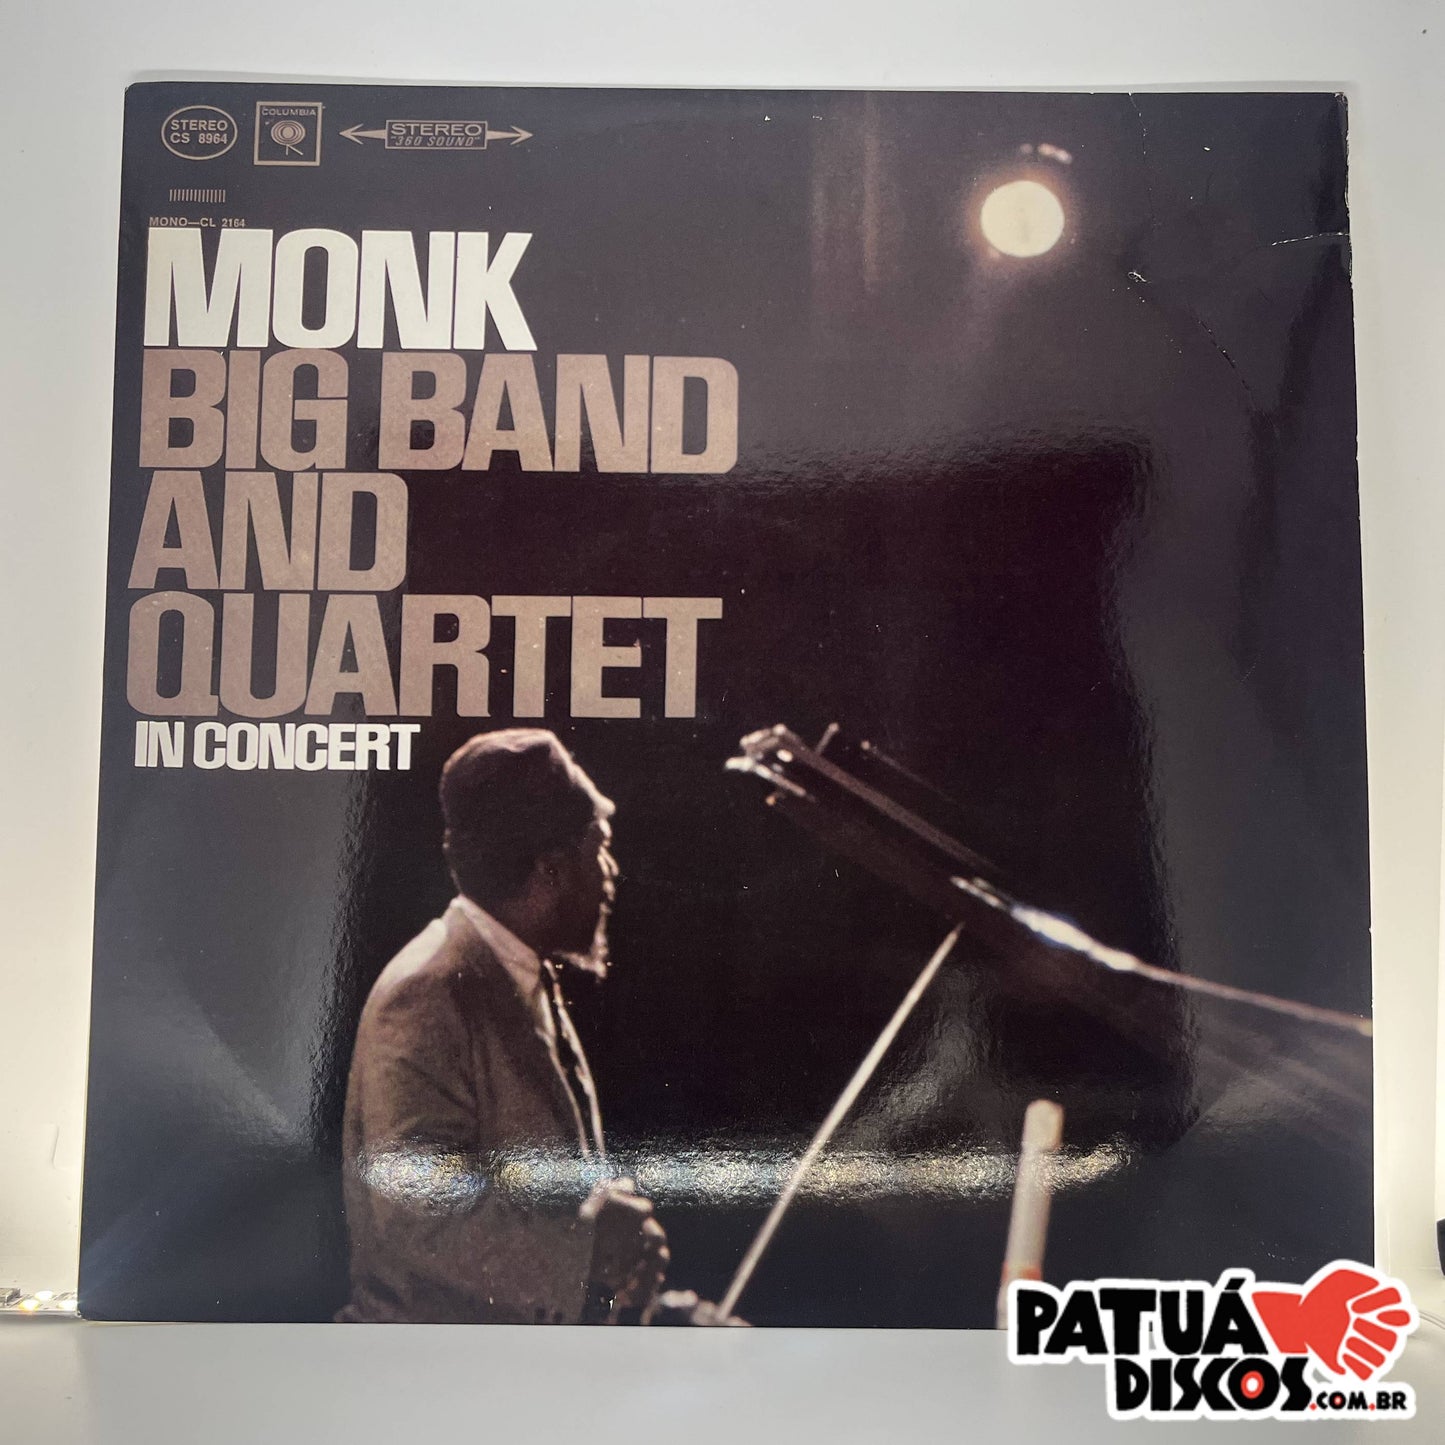 Monk - Big Band And Quartet In Concert - LP